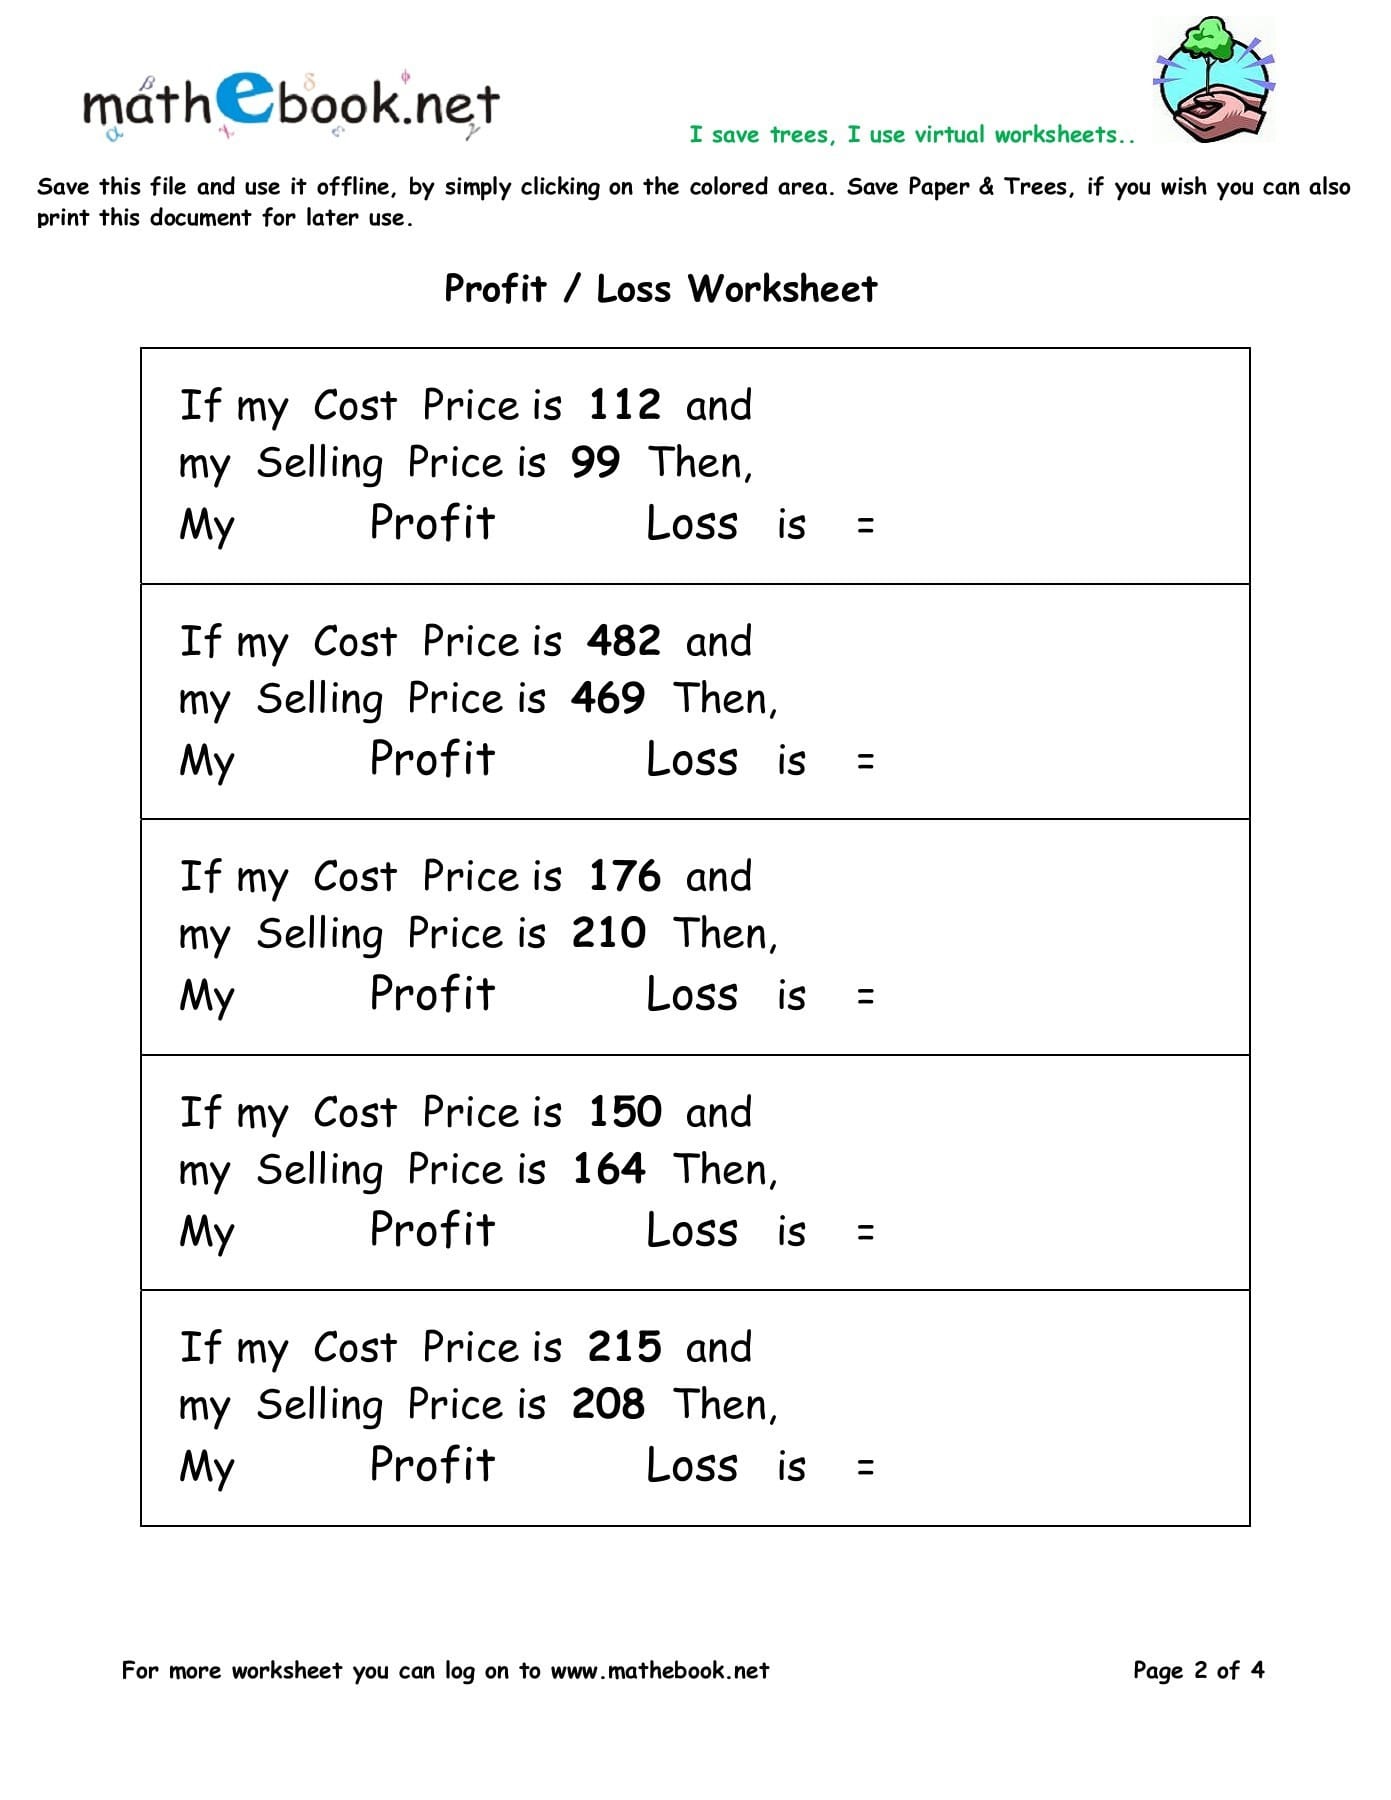 Profit Loss  Mathebook Pages 1  4  Text Version